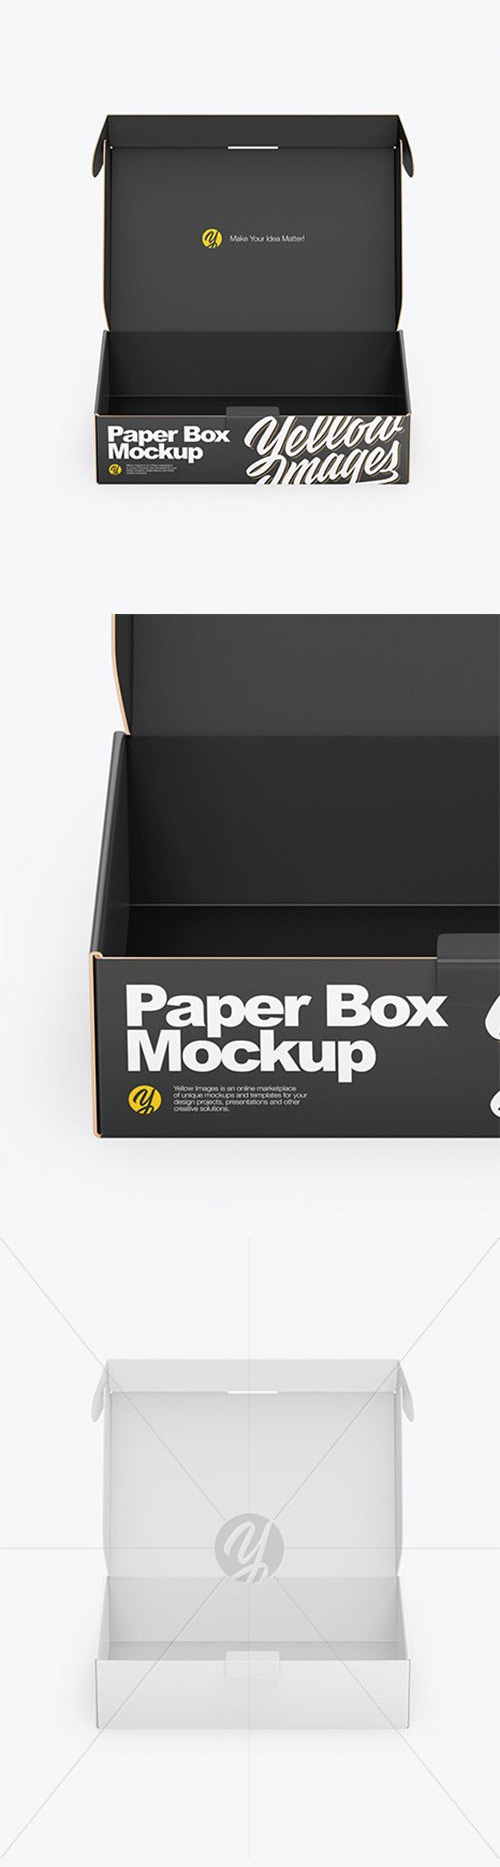 Opened Paper Box Mockup 82077